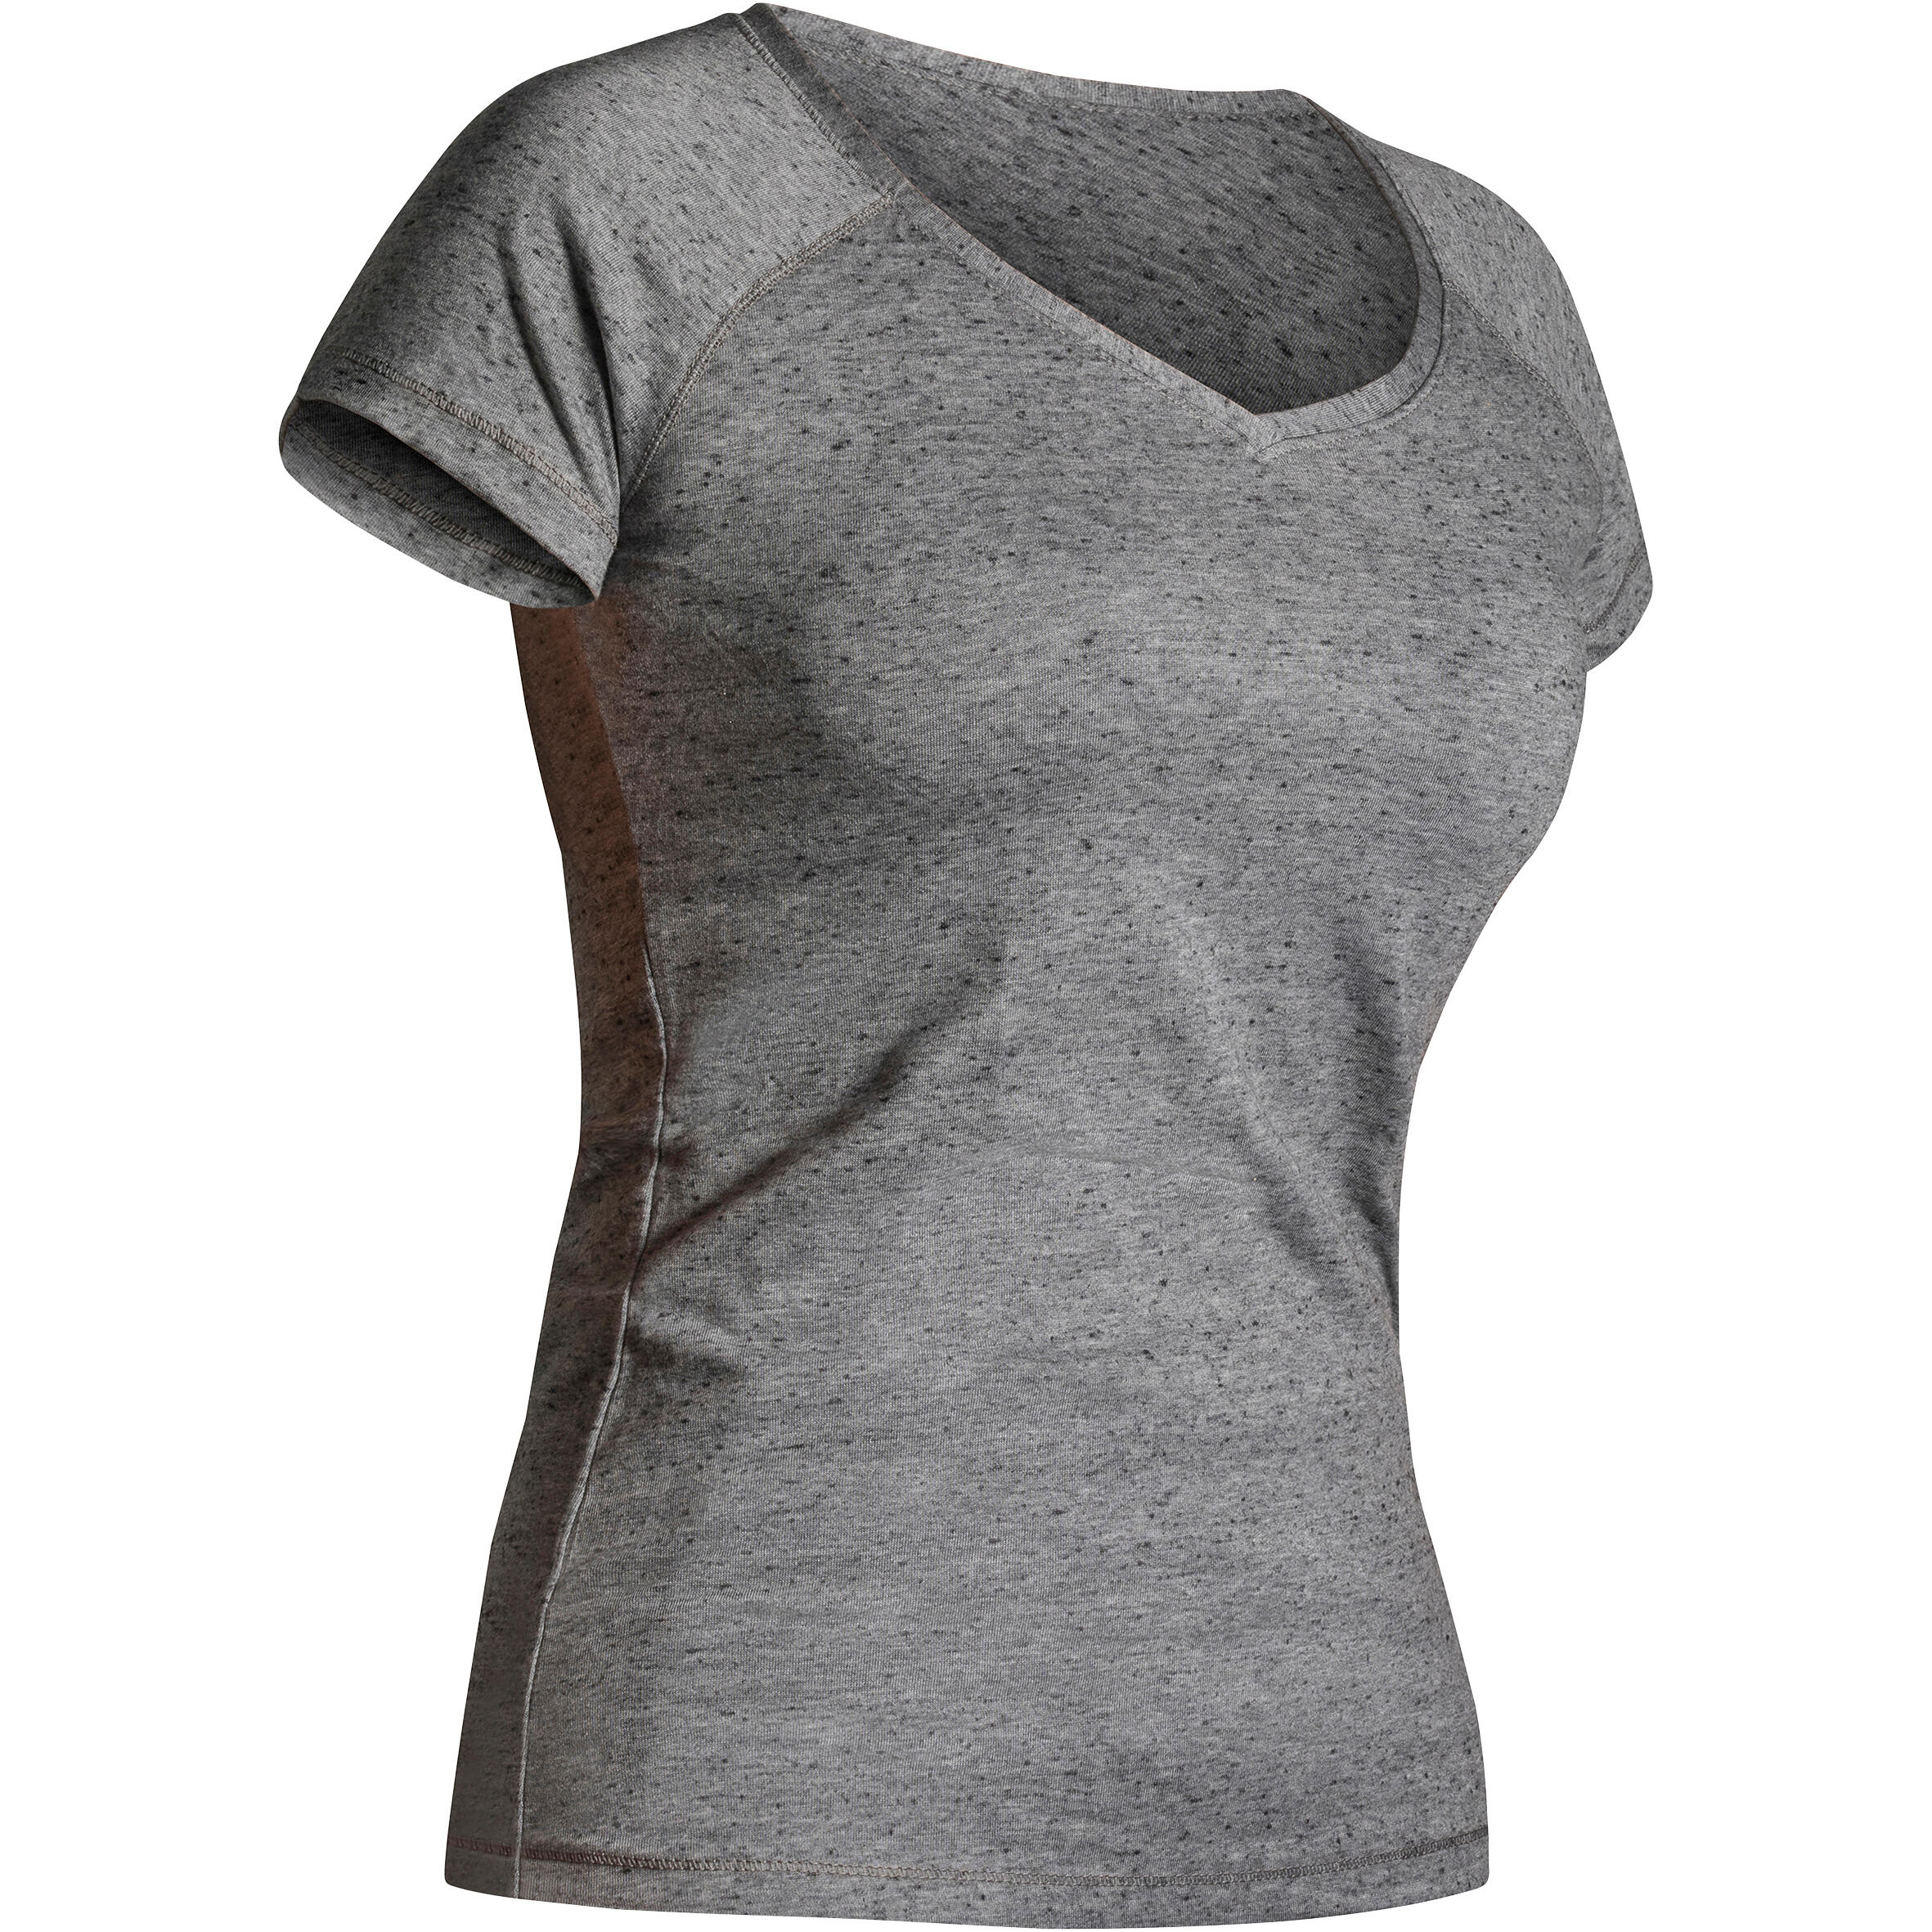 Women's Fitness V-Neck T-Shirt 500 - Grey 8/17